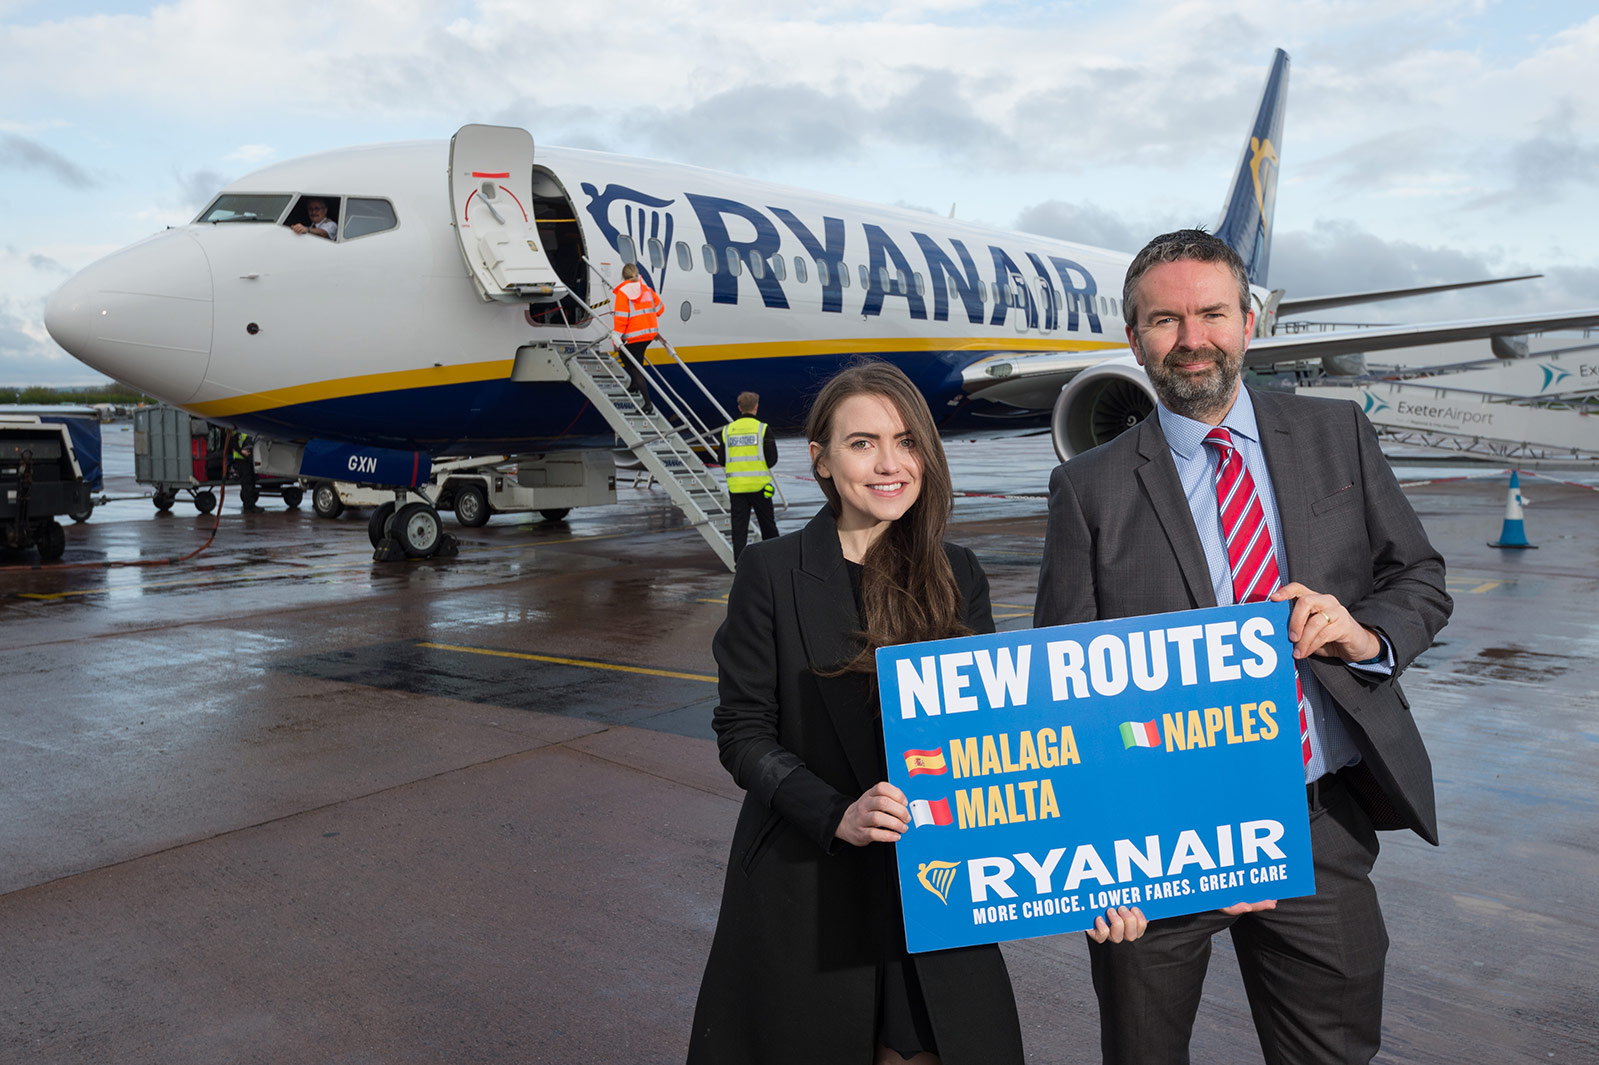 Ryanair’s First Exeter Flights Take Off  3 New Routes To Malta, Naples & Malaga